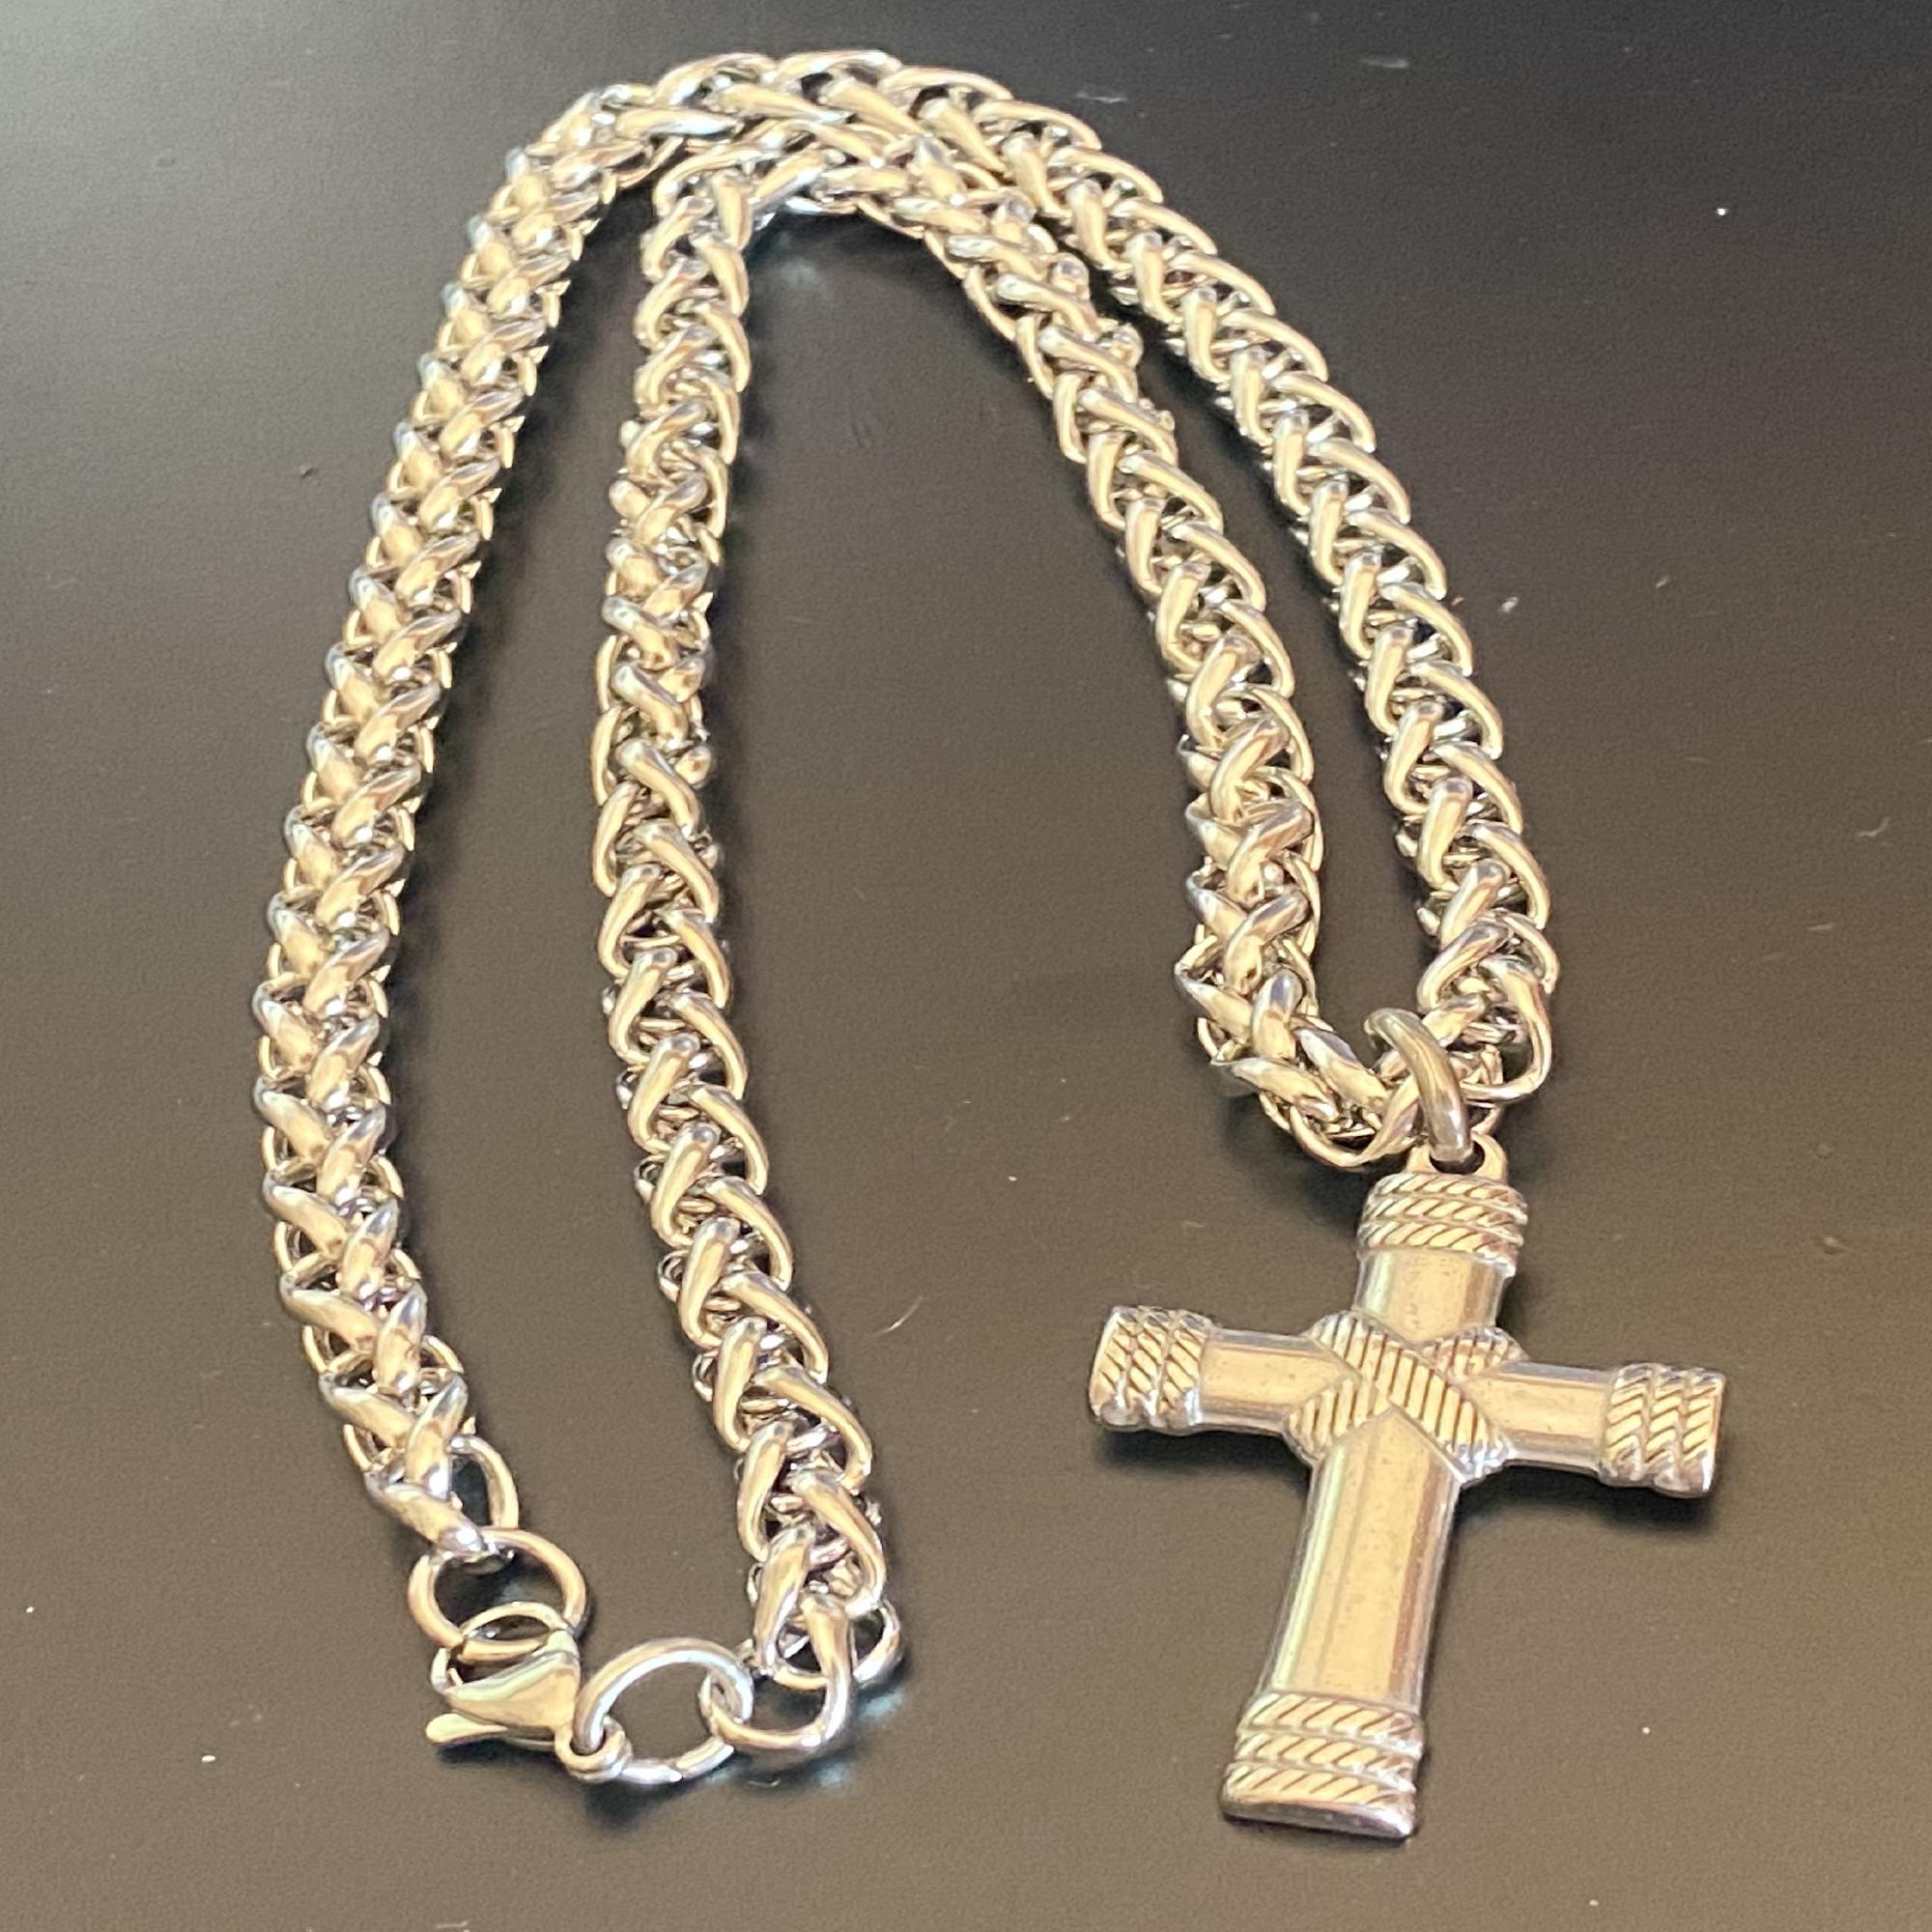 Collana da uomo con croce rosario in acciaio inox catenina lunga 50 cm punk